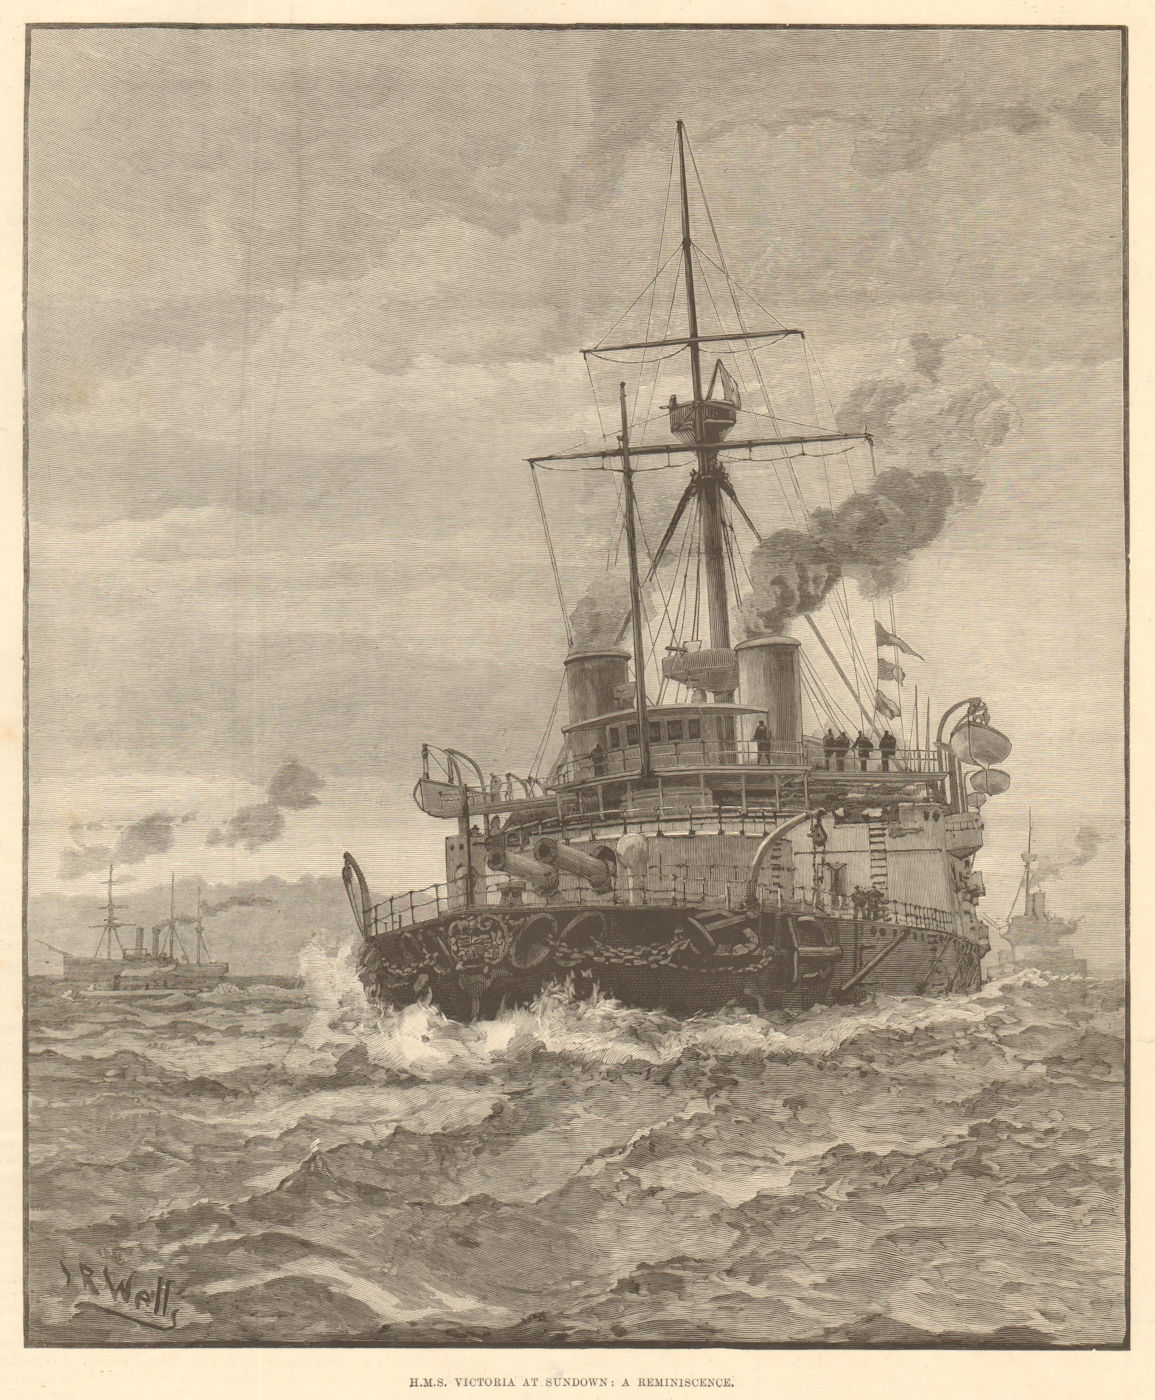 H. M. S. Victoria at sundown: a reminiscence. Royal Navy. Ships 1893 ILN print